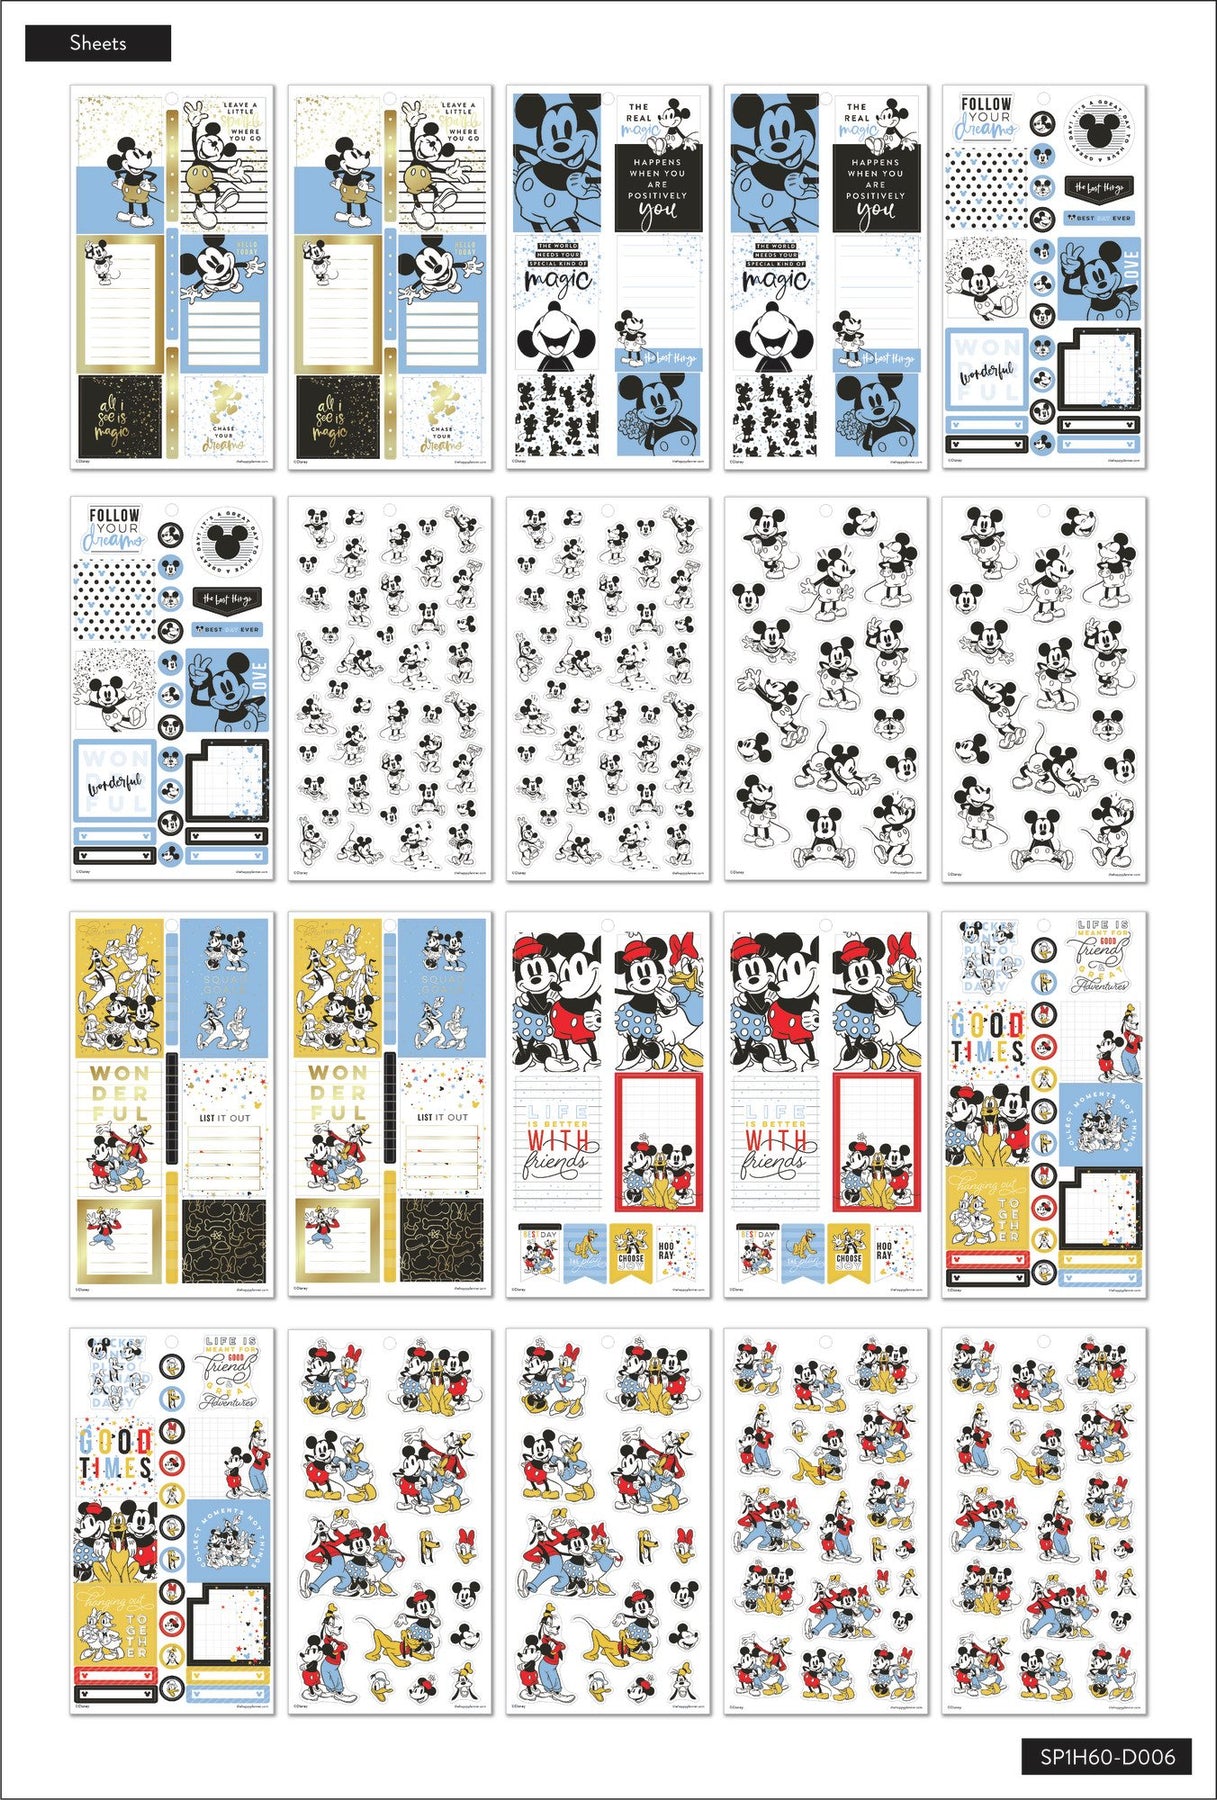 Disneyworld Digital Planner Stickers Bundle Happiest Snacks Disneyland  Disneyworld Planner Stickers Digital Planning Goodnotes Stickers 